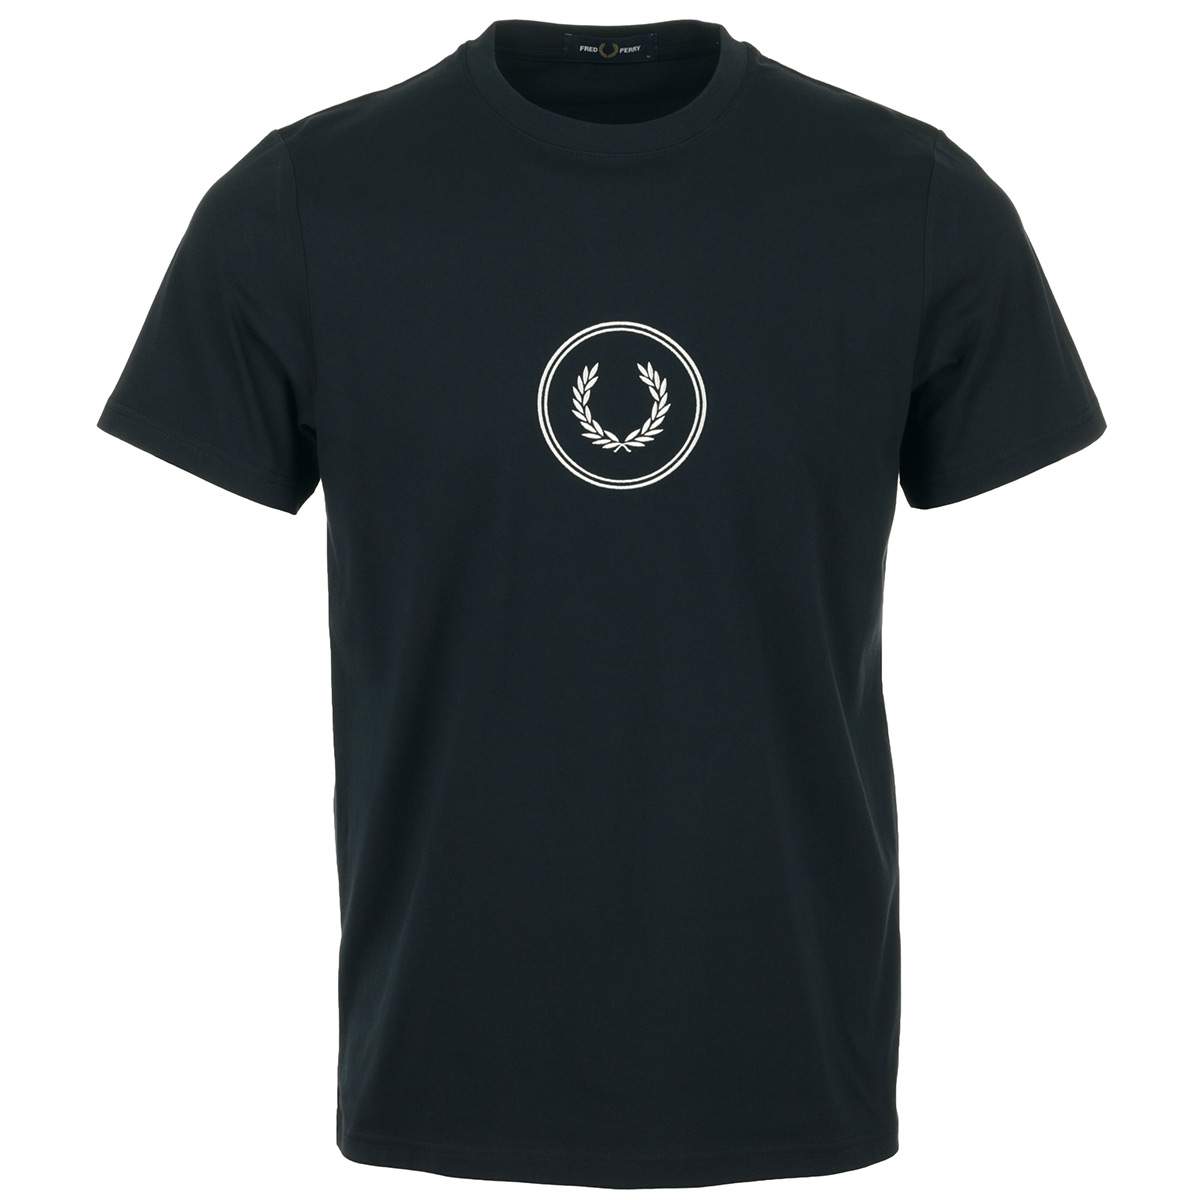 Fred Perry Circle Branding T-Shirt